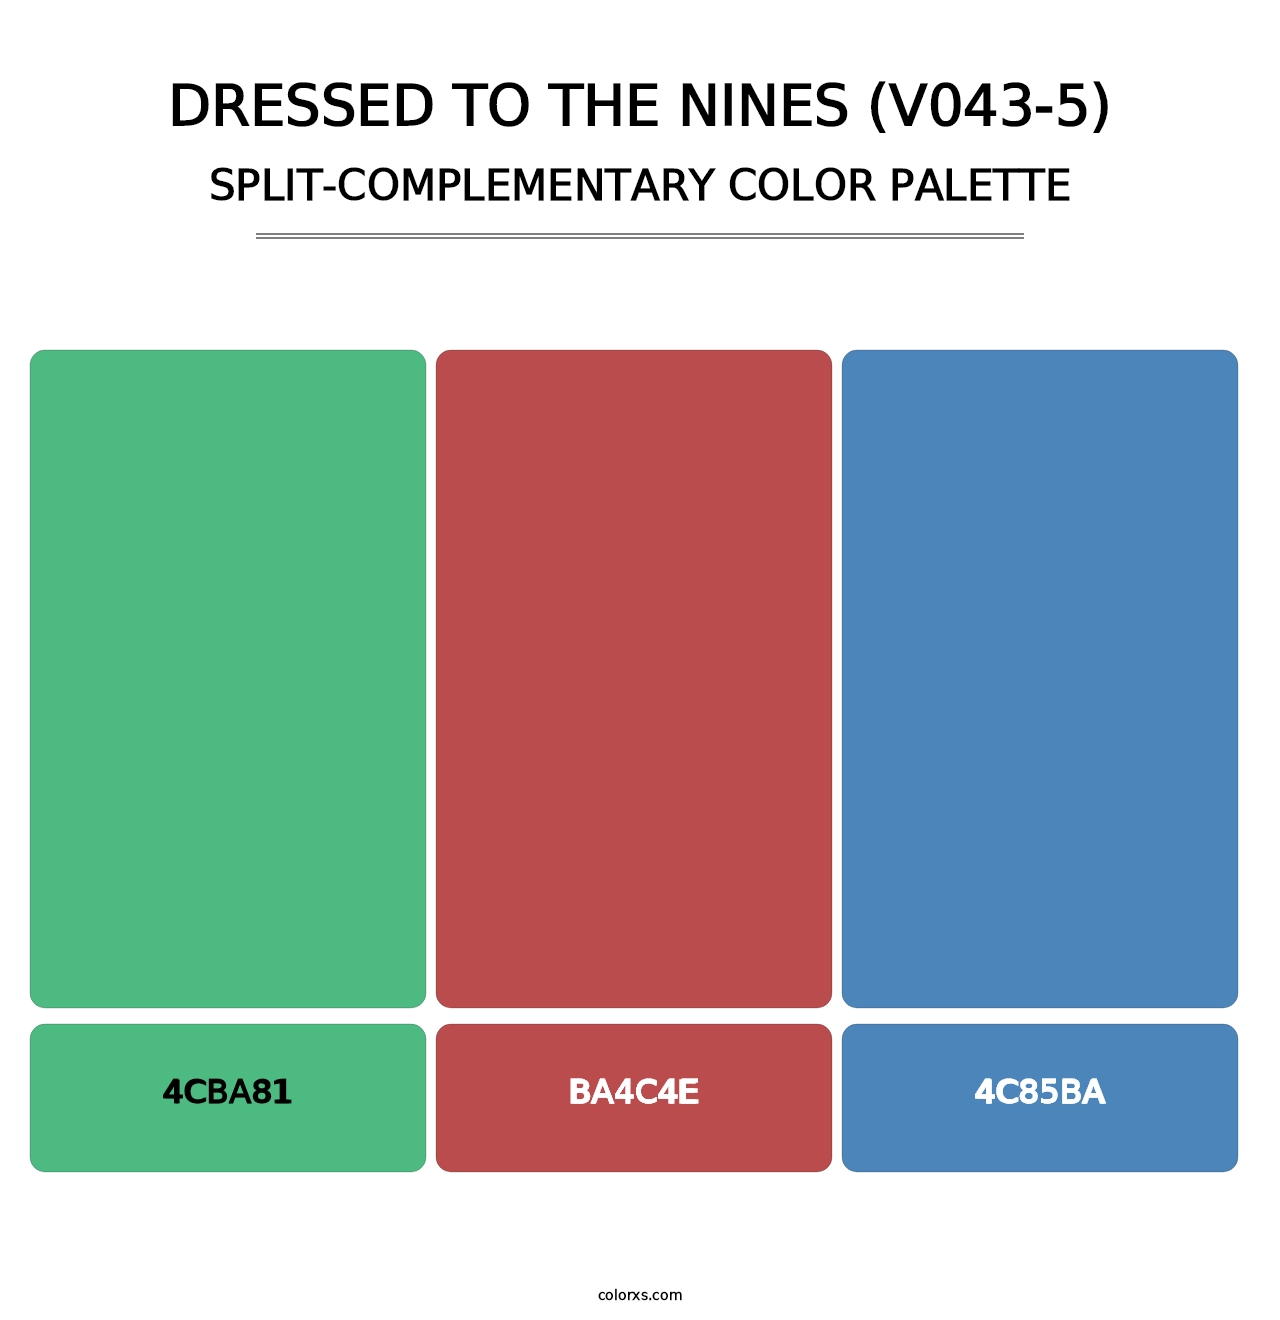 Dressed to the Nines (V043-5) - Split-Complementary Color Palette